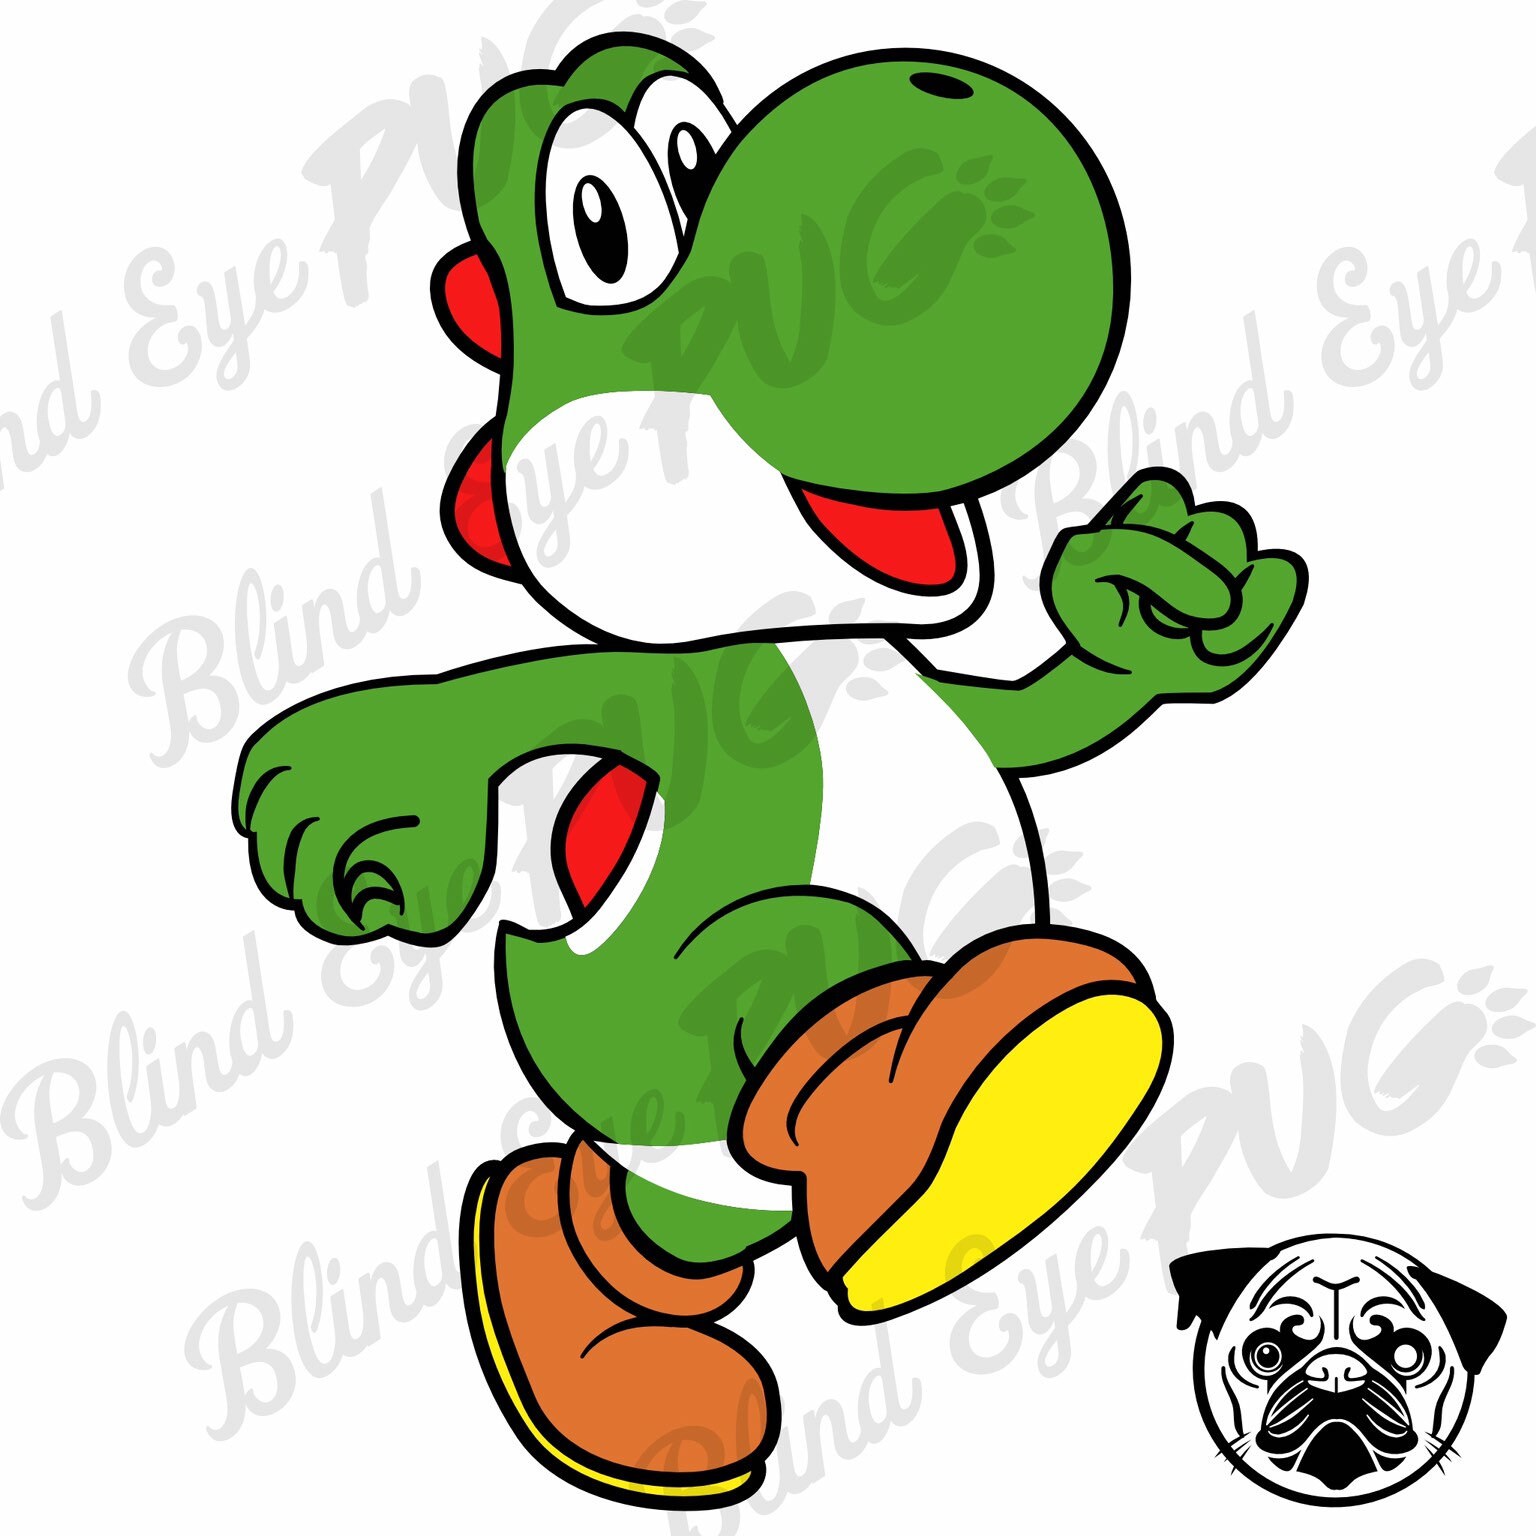 Super Mario Yoshi Luigi SVG - Free Download - Layered Mario Characters –  8SVG